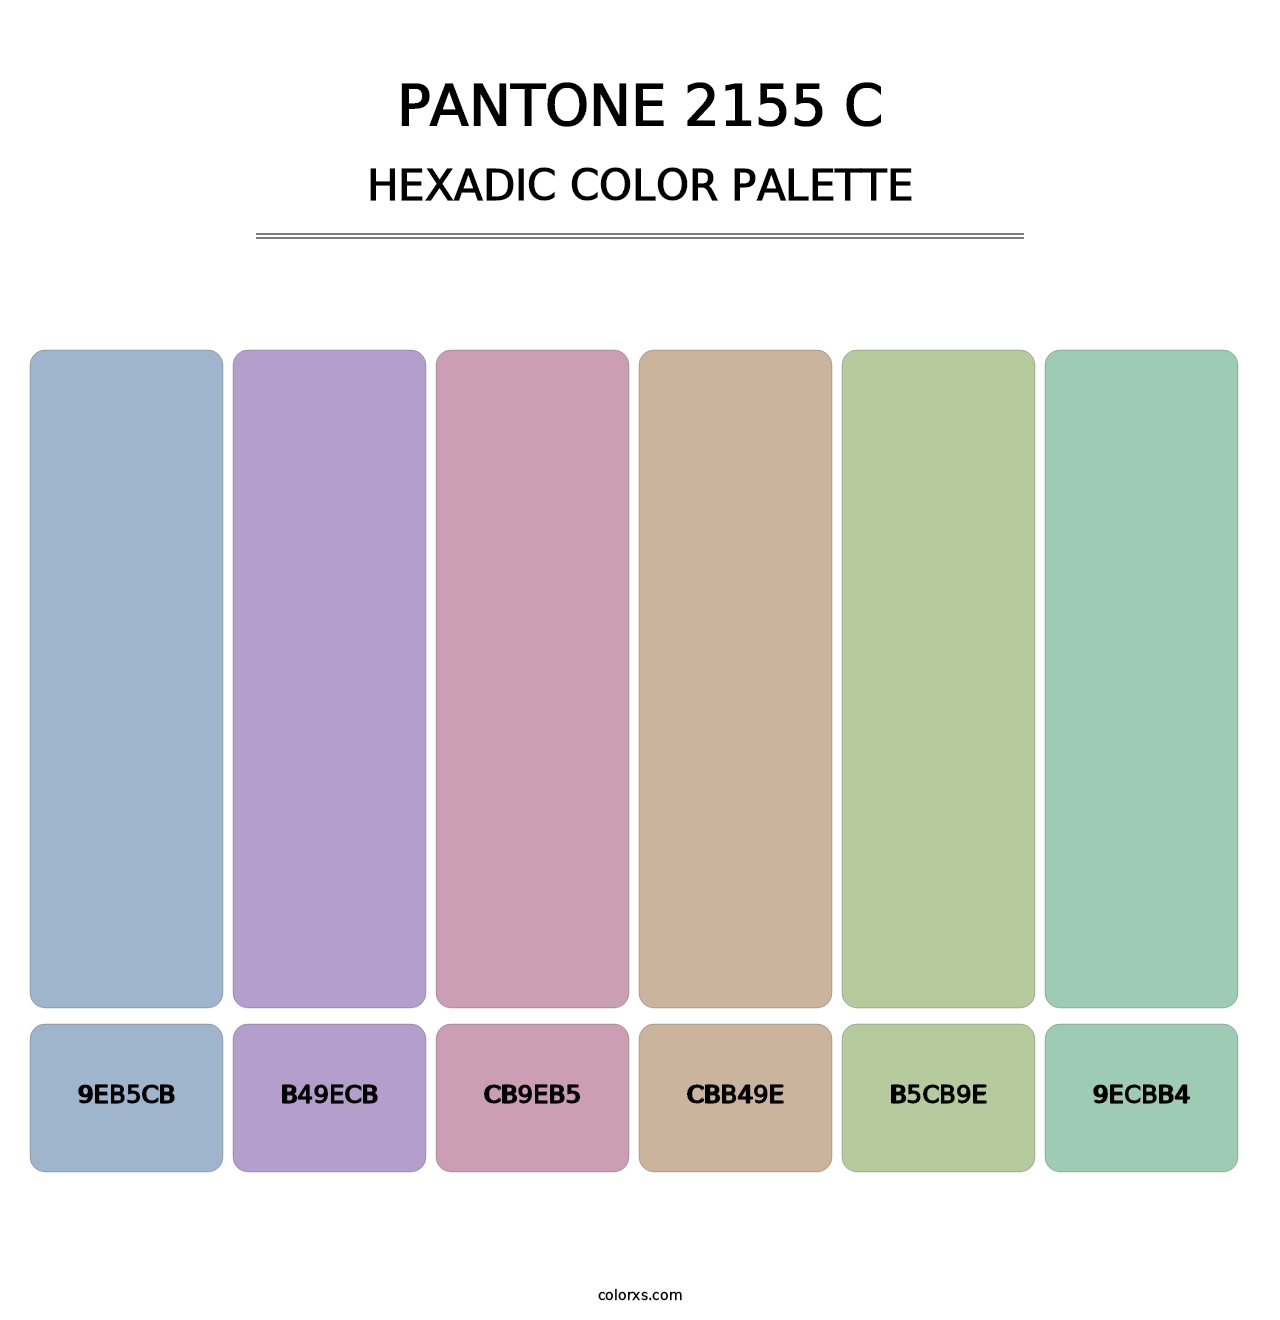 PANTONE 2155 C - Hexadic Color Palette